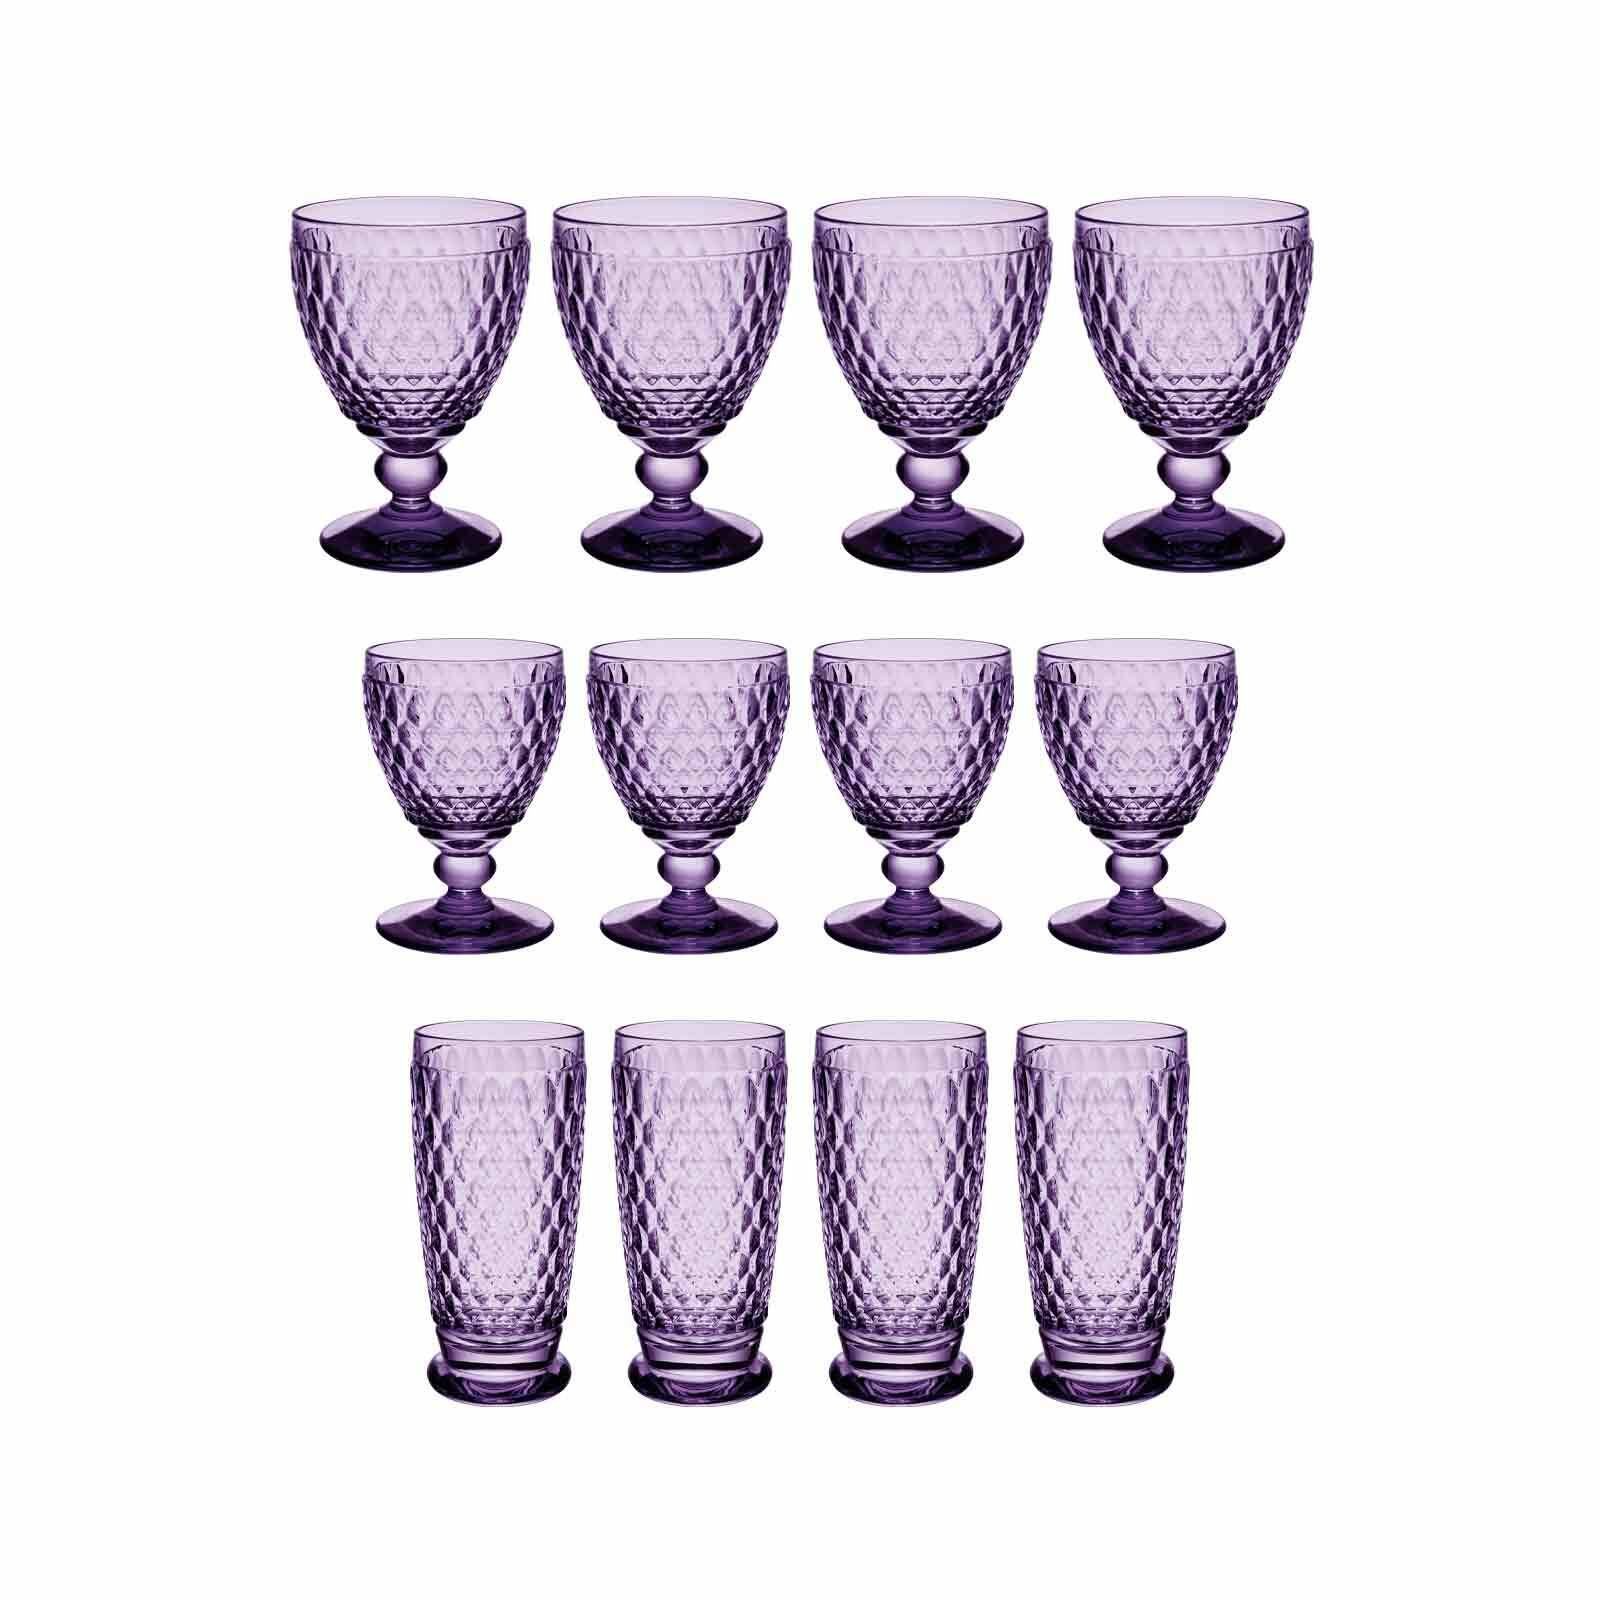 Villeroy & Boch Glas Boston Coloured Wein- und Longdrinkgläser 12er Set, Glas lavender